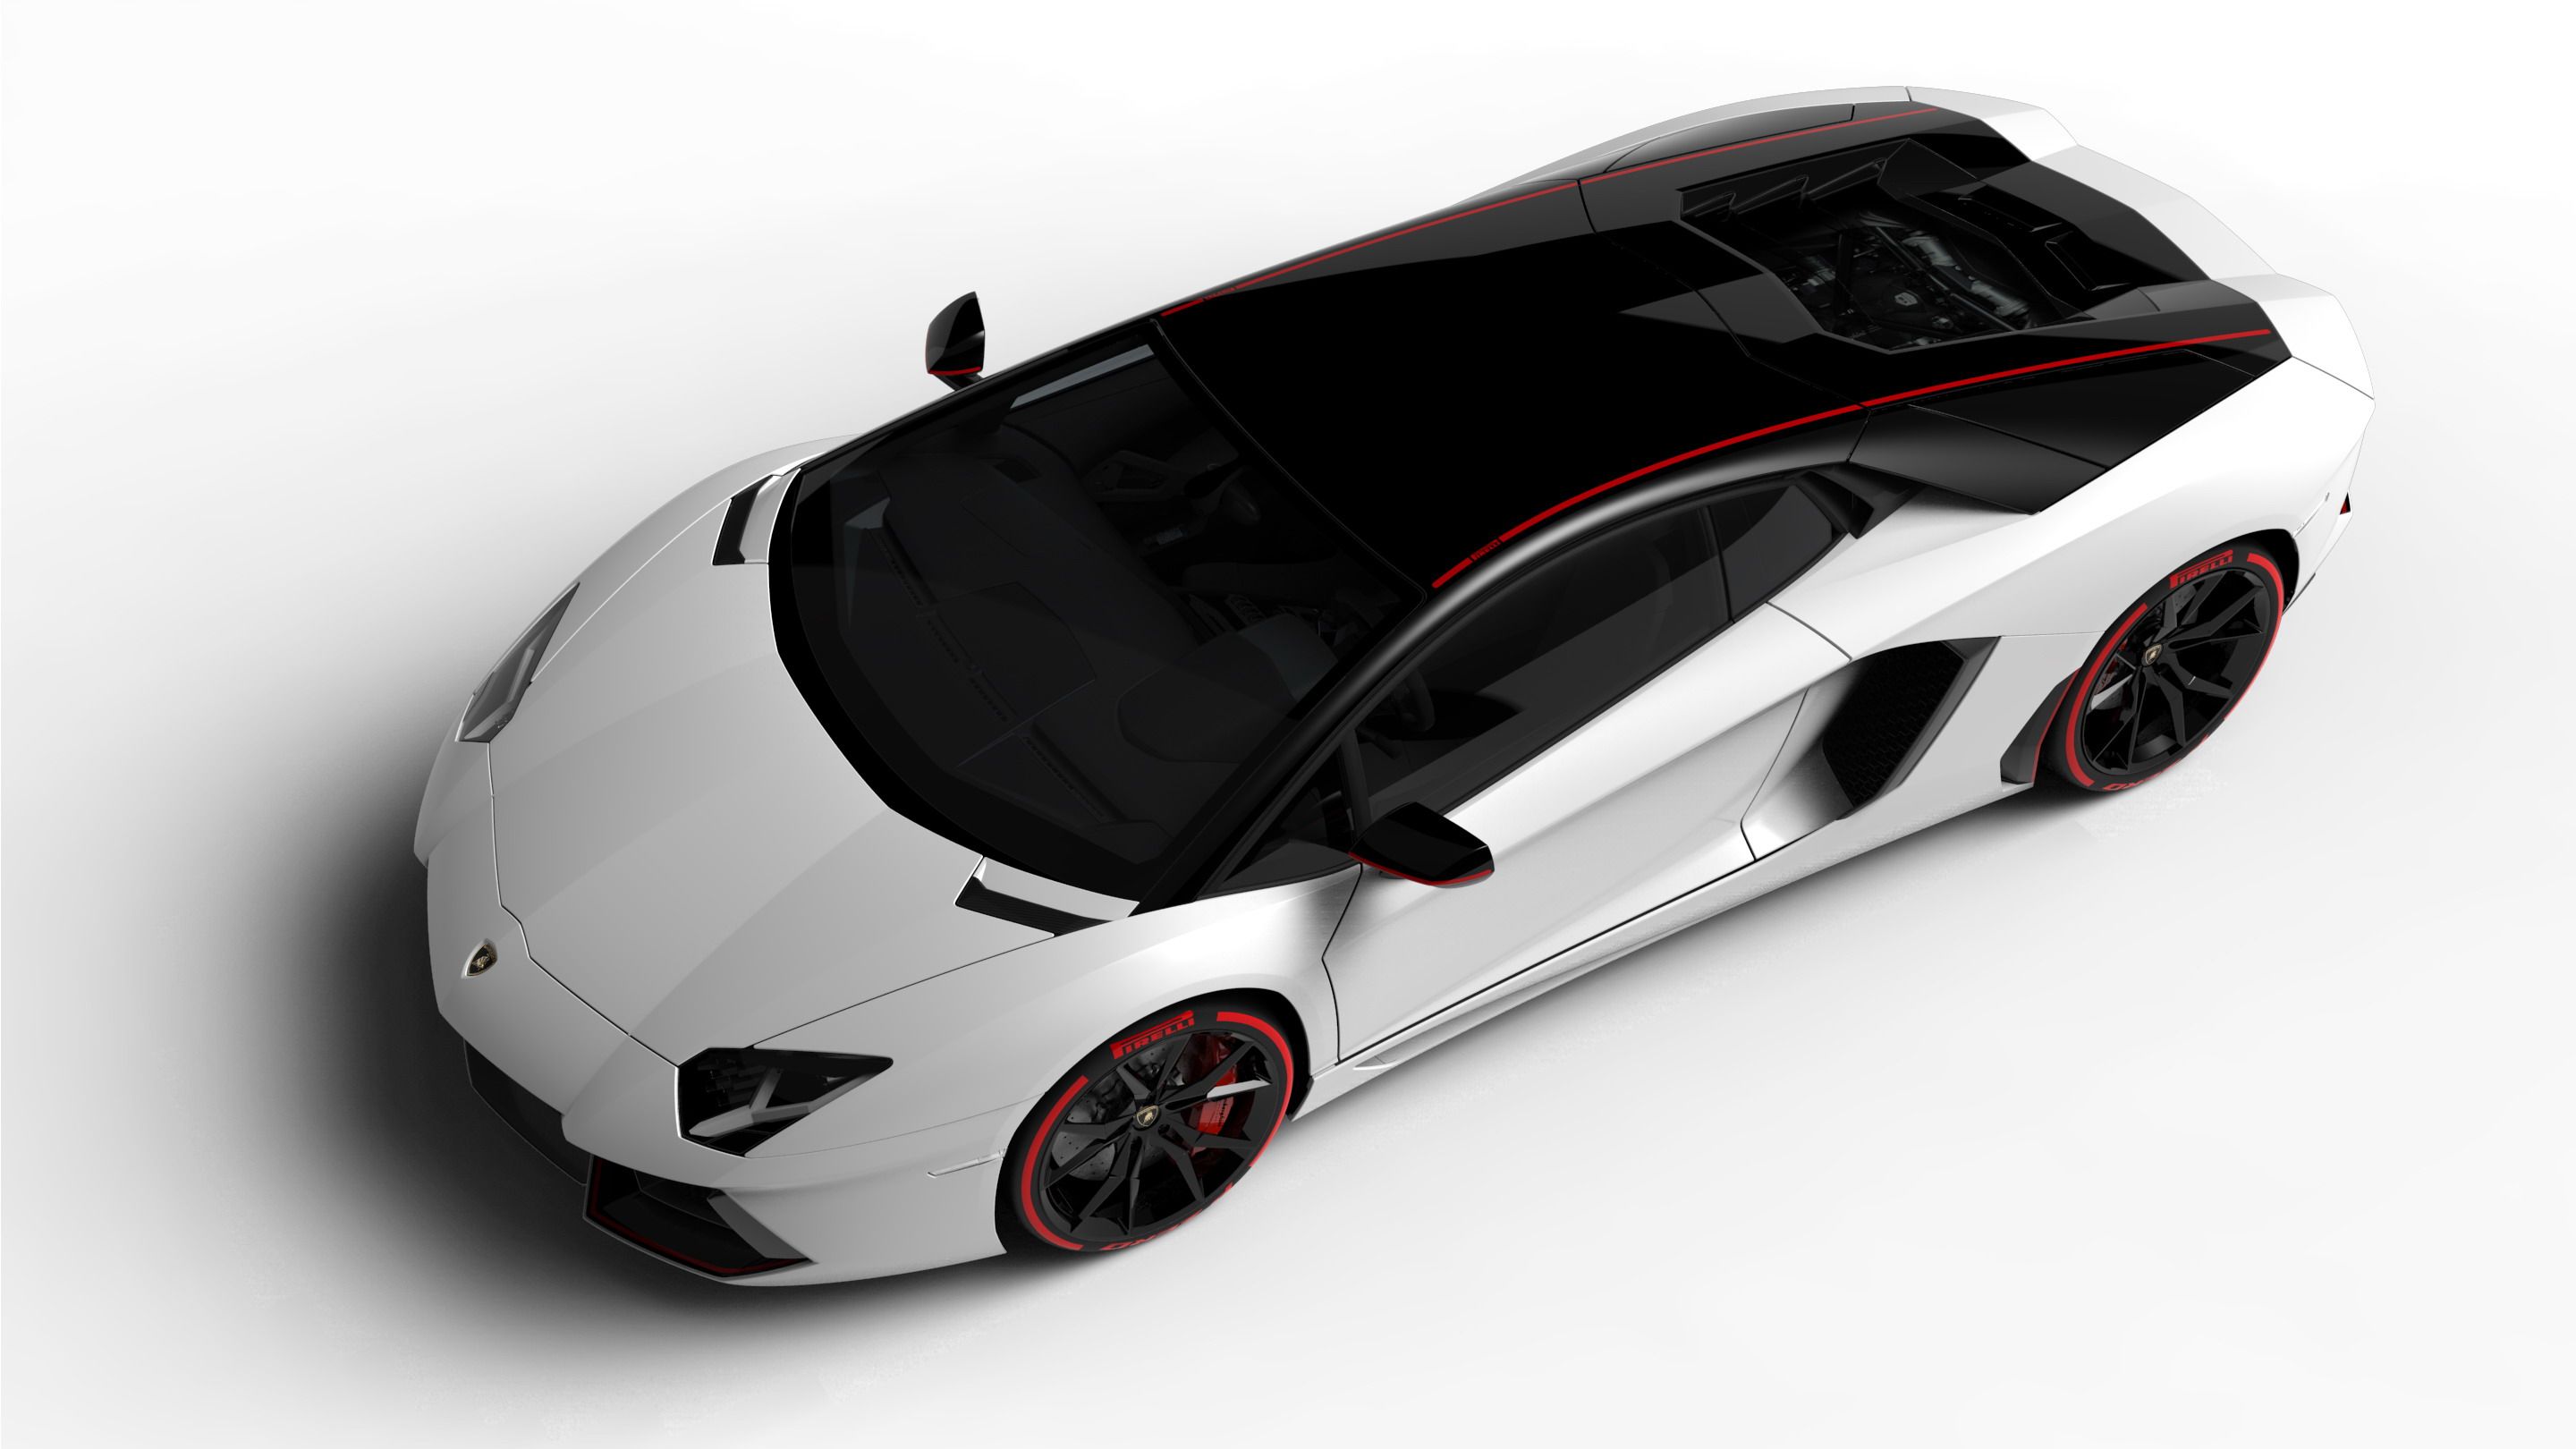  Lamborghini is celebrating its relationship with Pirelli with this Aventador LP 700-4 Pirelli Edition.